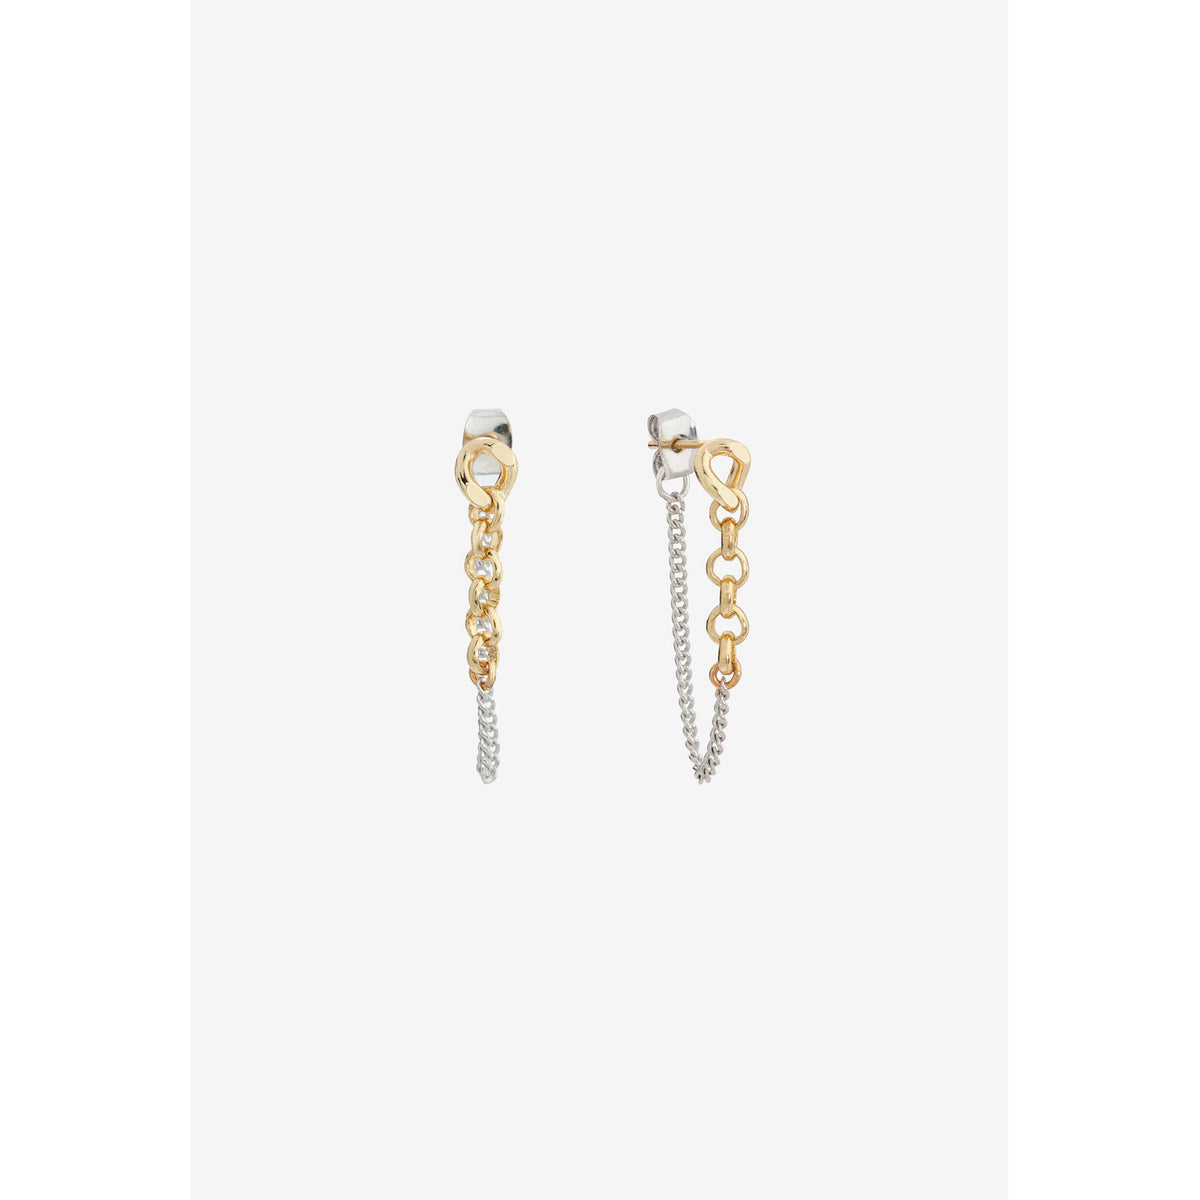 Shashi Jewelry Gemini Chain Earring in Gold/Silver